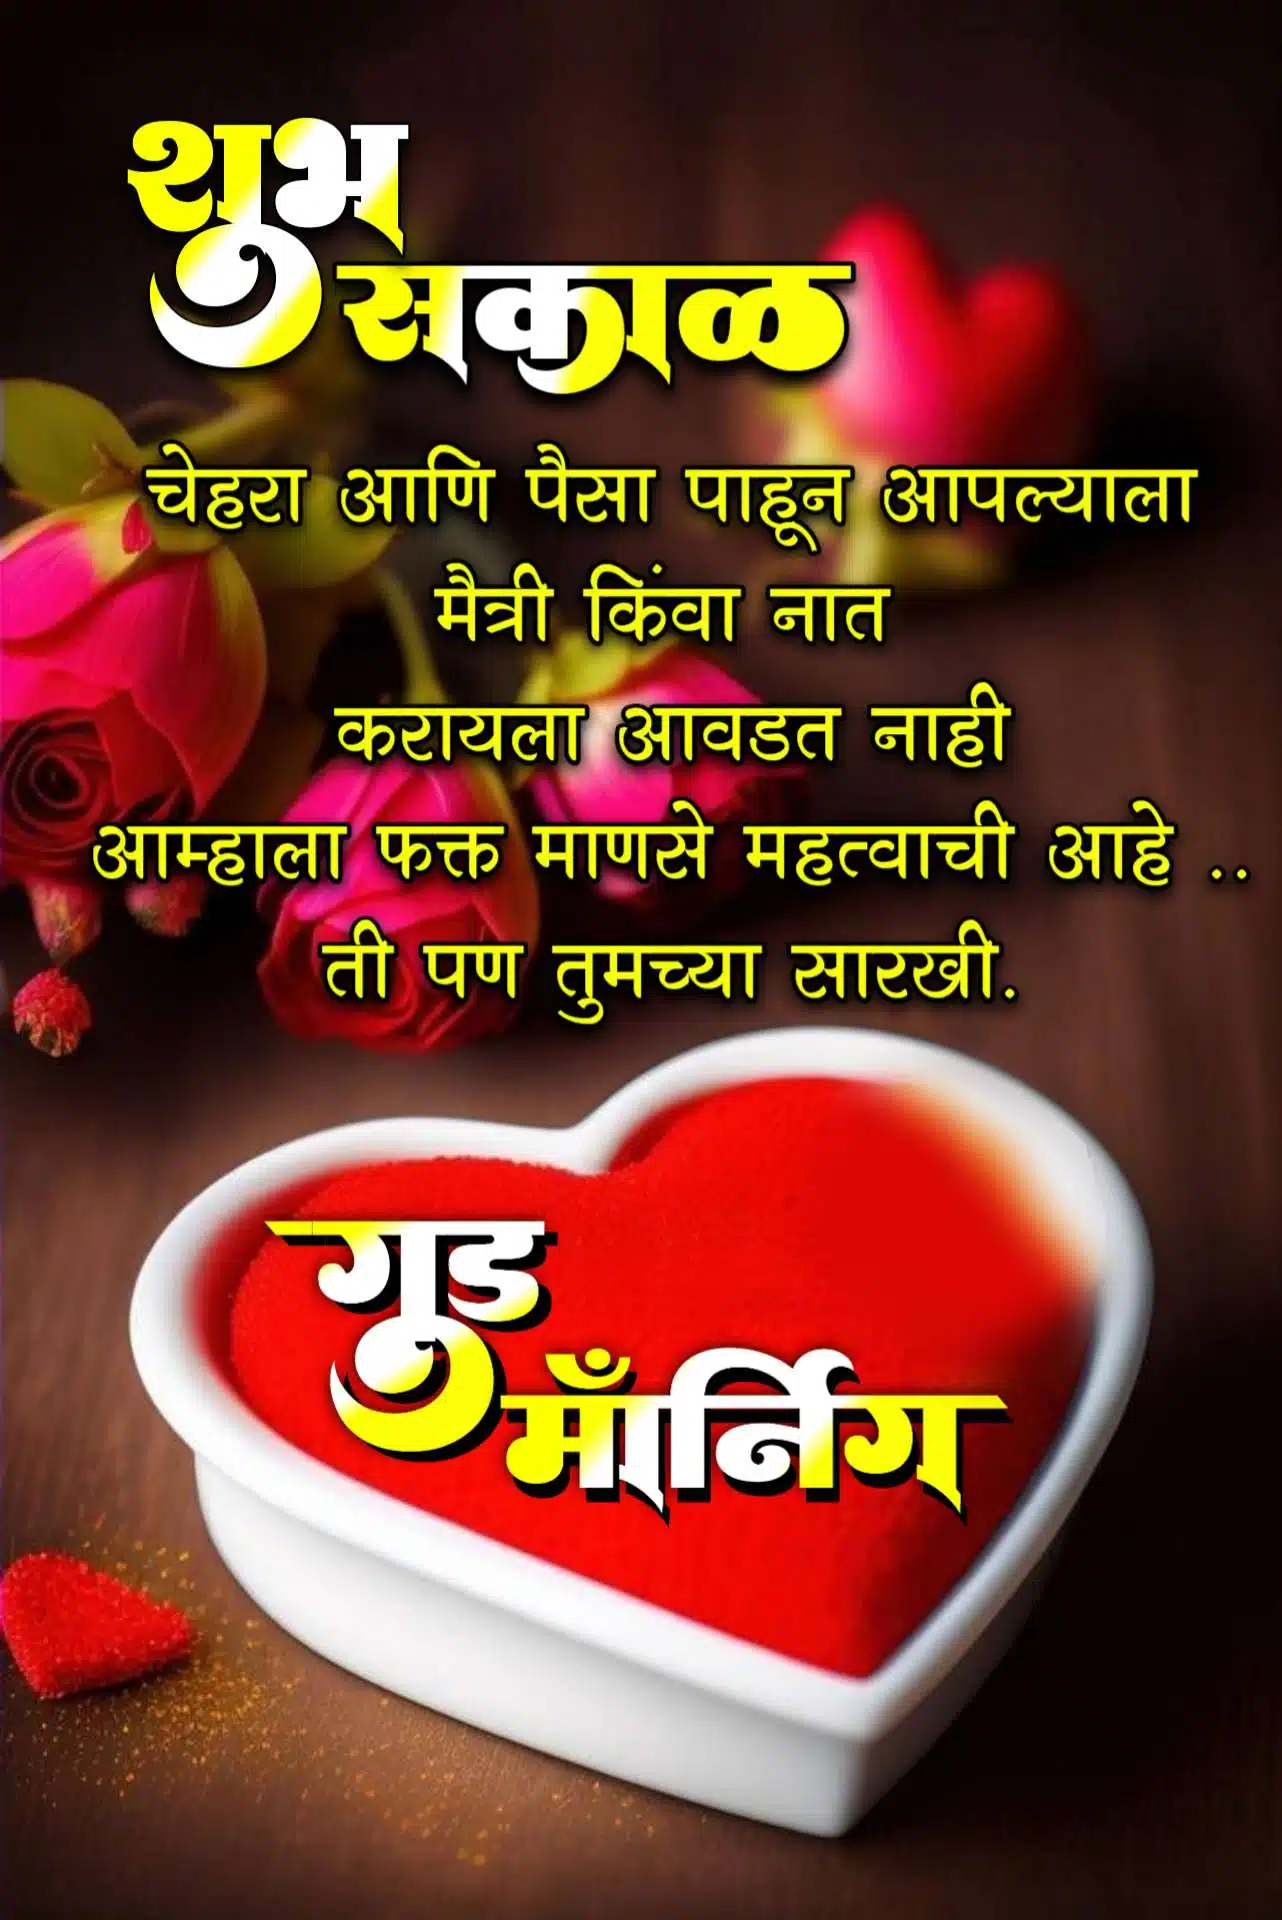 relationship best friend relationship good morning message in marathi